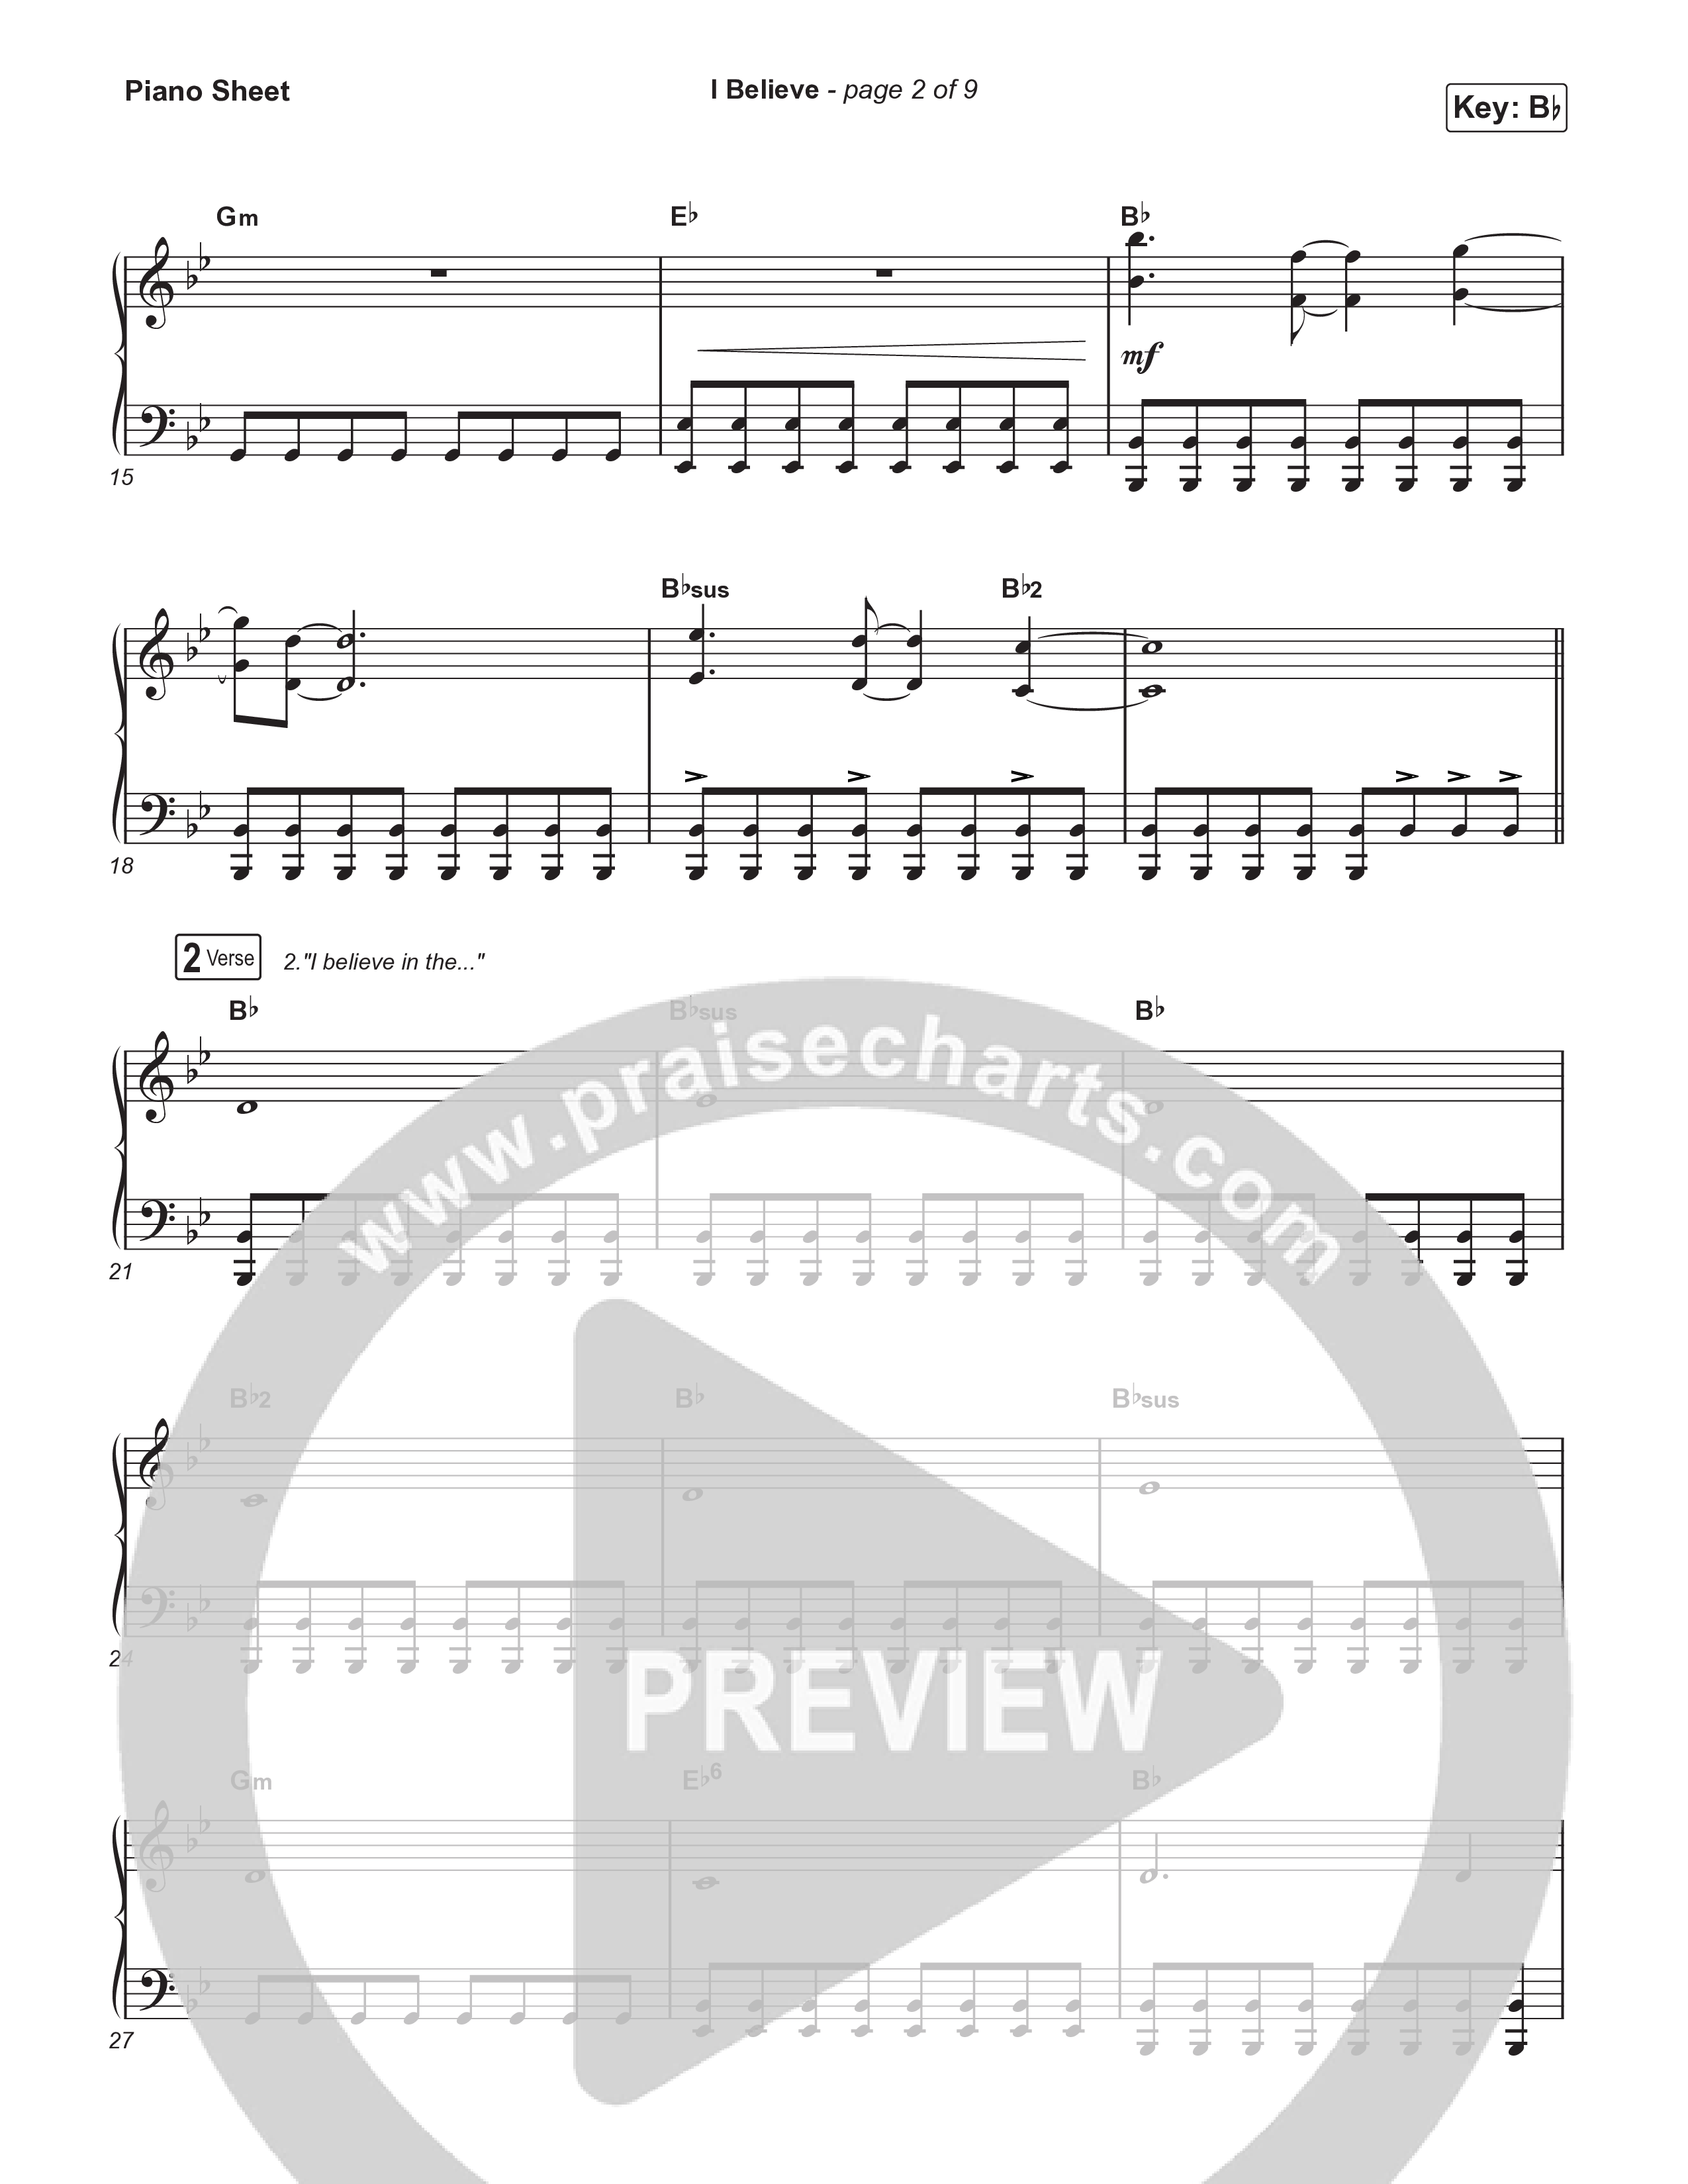 I Believe (Unison/2-Part) Piano Sheet (Phil Wickham)